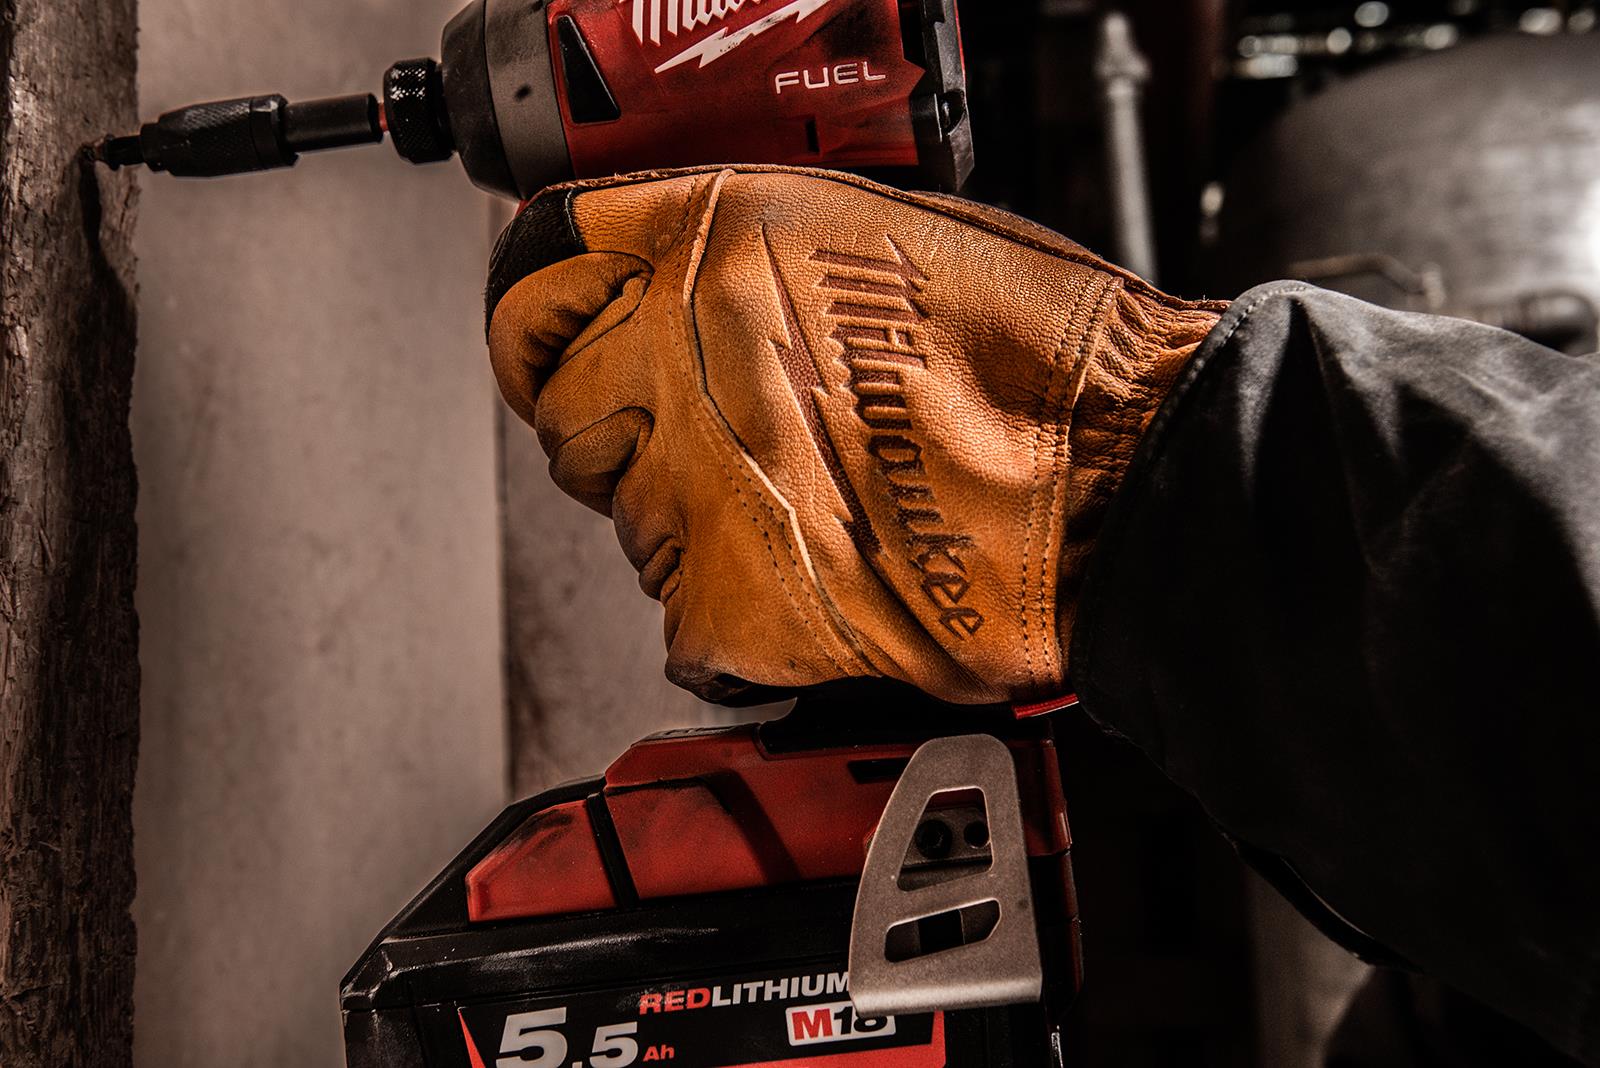 Milwaukee Safety Gloves Goatskin Leather Glove Brown Size 9 / L Large